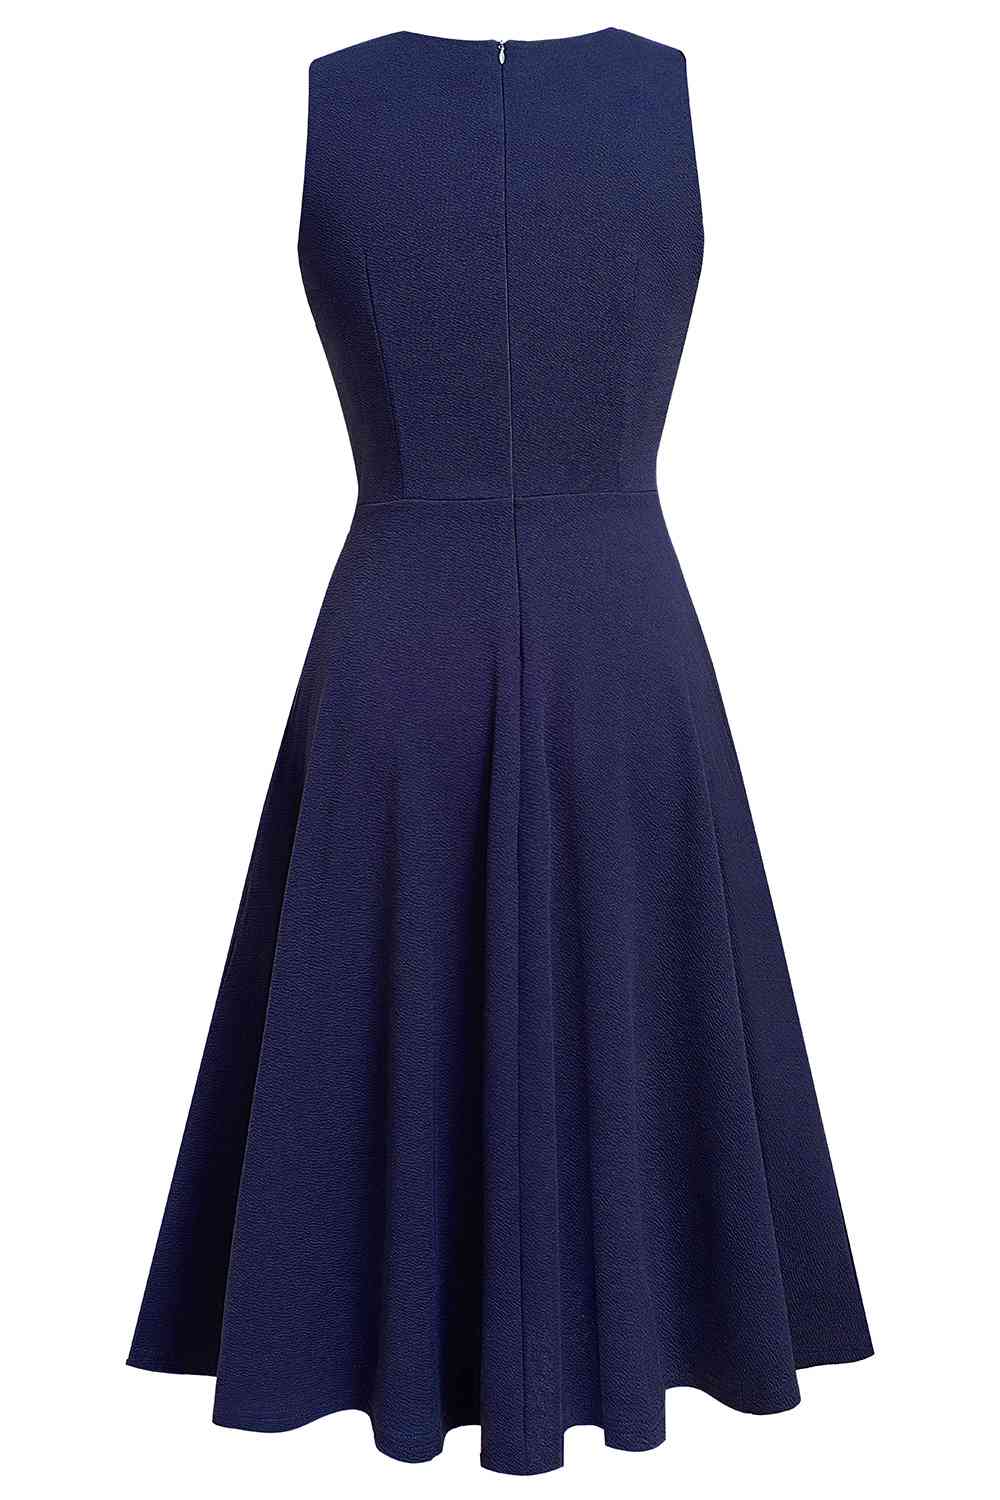 Round Neck Sleeveless Lace Trim Dress - All Dresses - Dresses - 15 - 2024